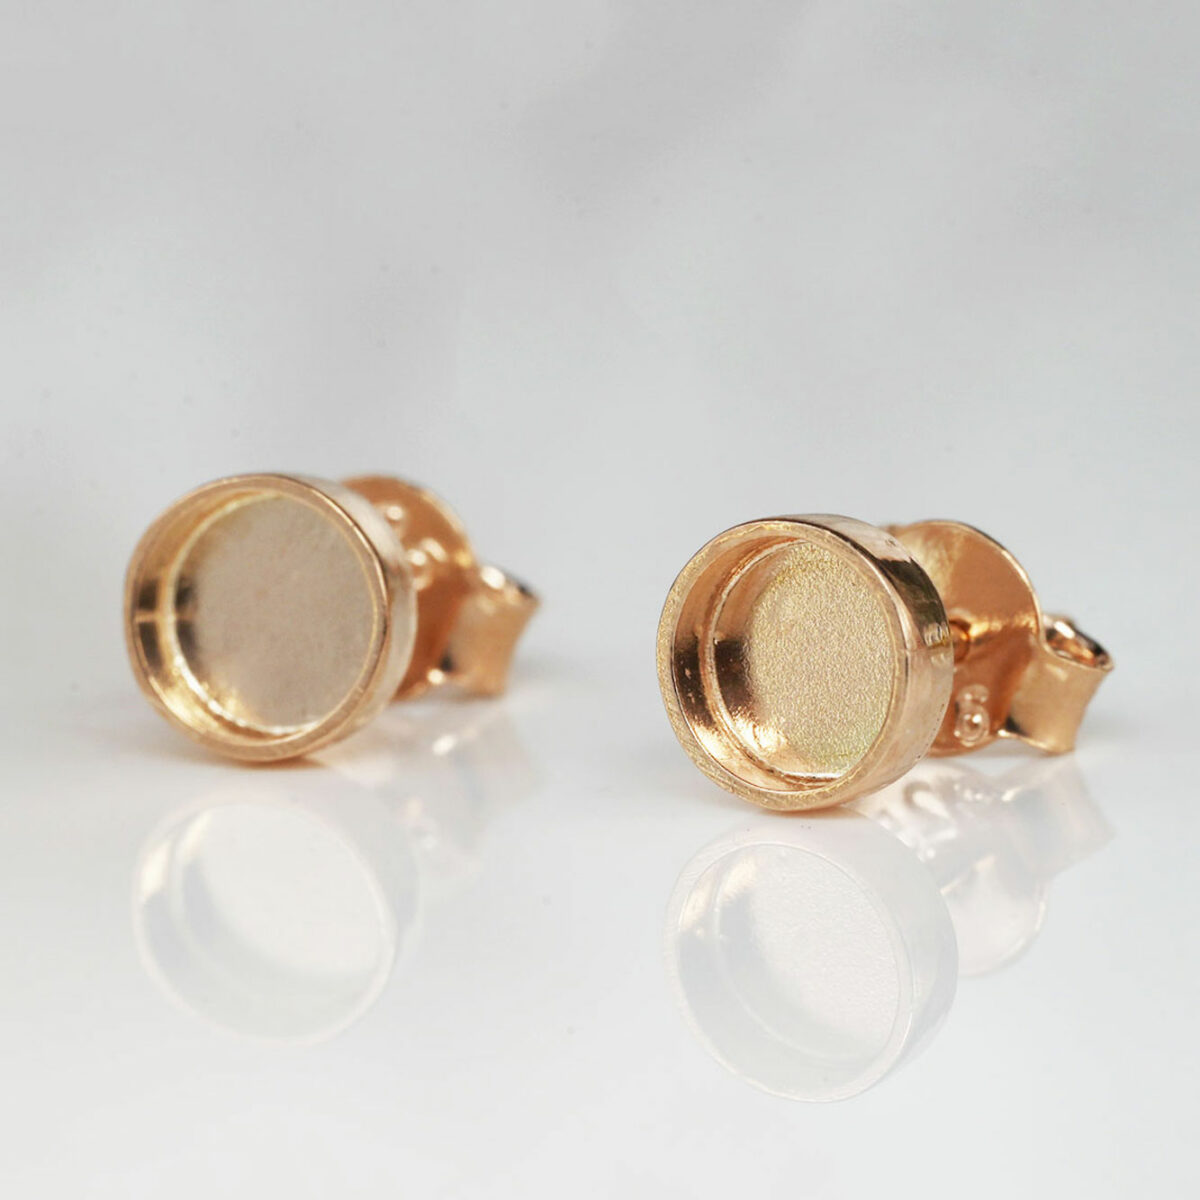 DIY Breastmilk jewelry kit studded earrings from KeepsakeMom sterling silver round empty cups simple rose gold